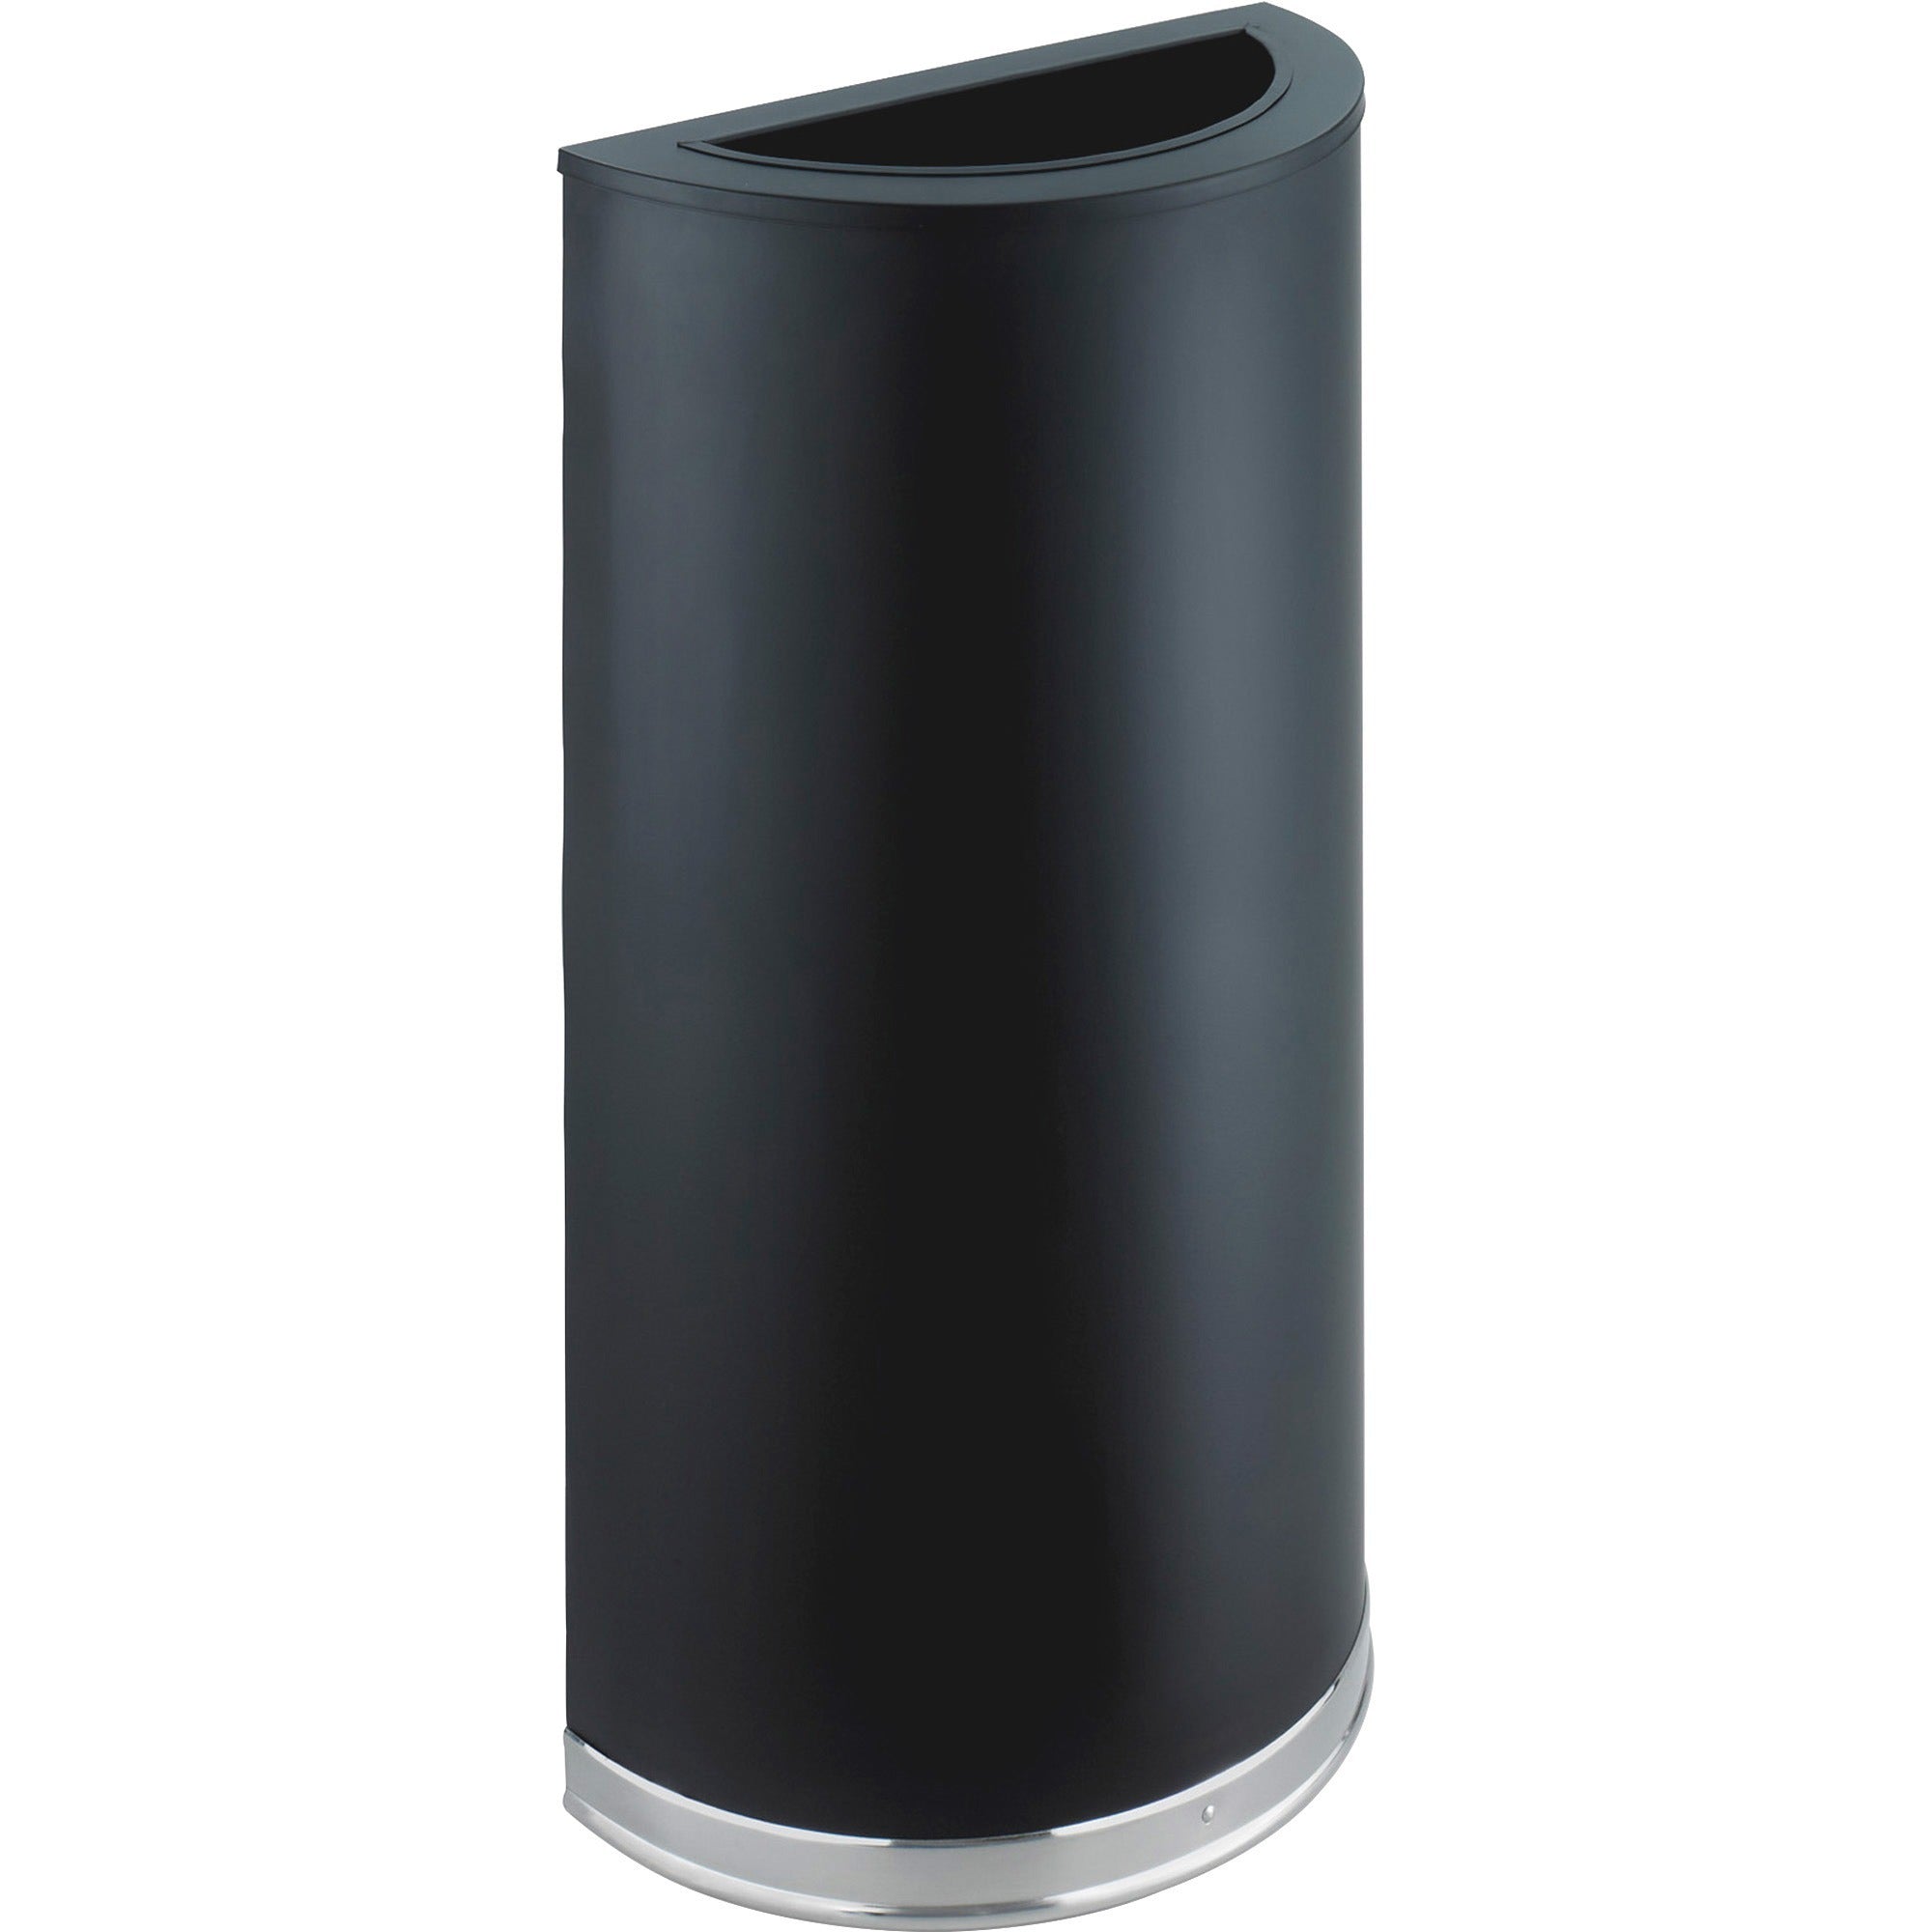 safco-half-round-receptacle-1250-gal-capacity-half-round-325-height-x-175-width-x-9-depth-steel-rubber-plastic-black-1-each_saf9940bl - 3